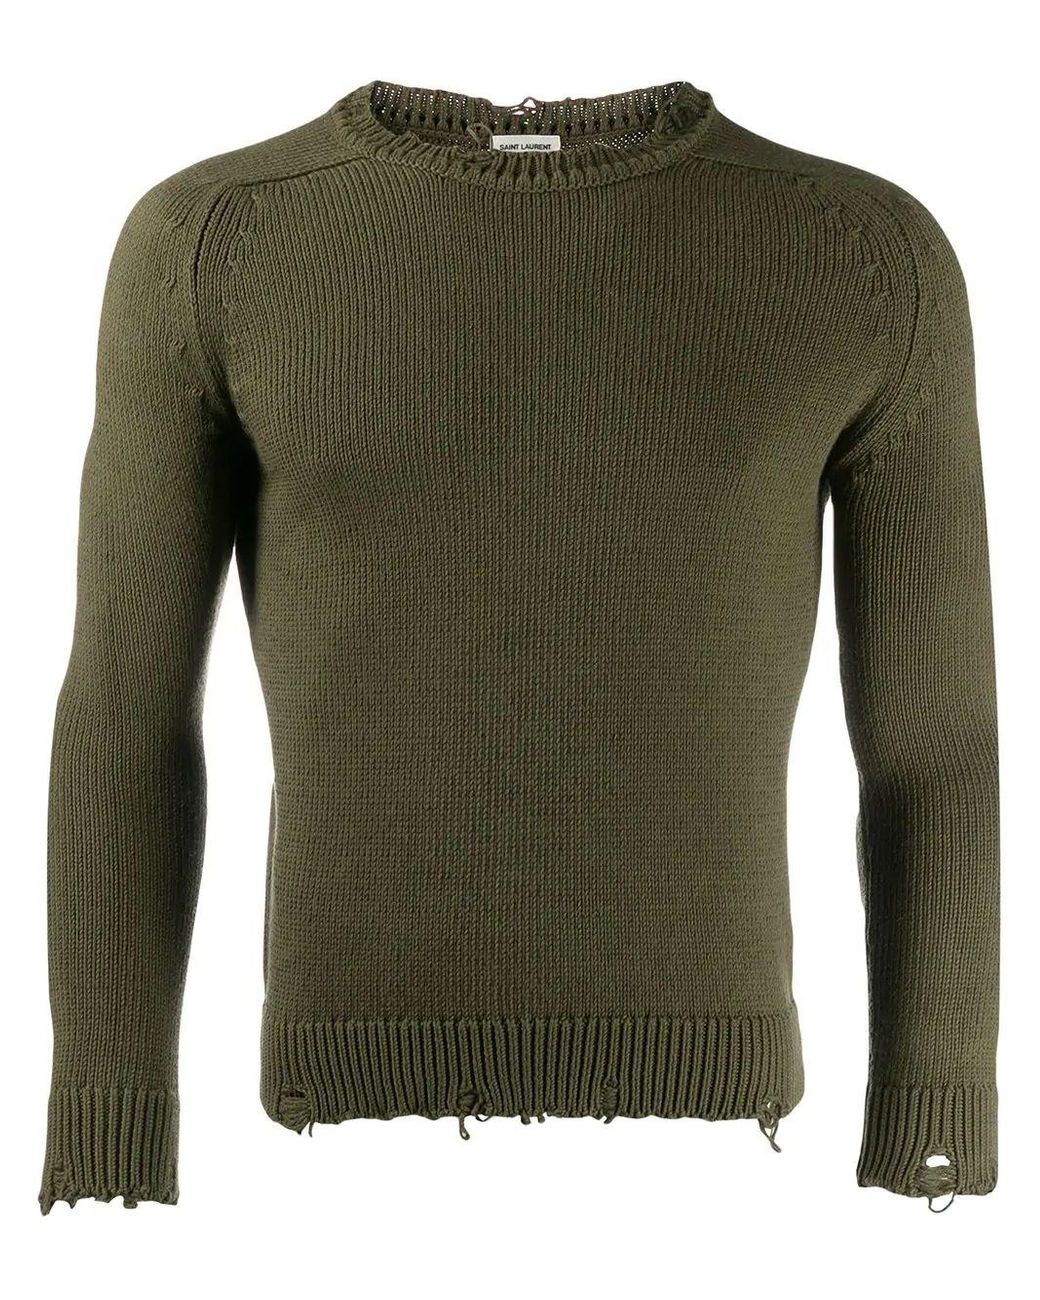 Saint Laurent Cotton Sweater in Green for Men - Lyst